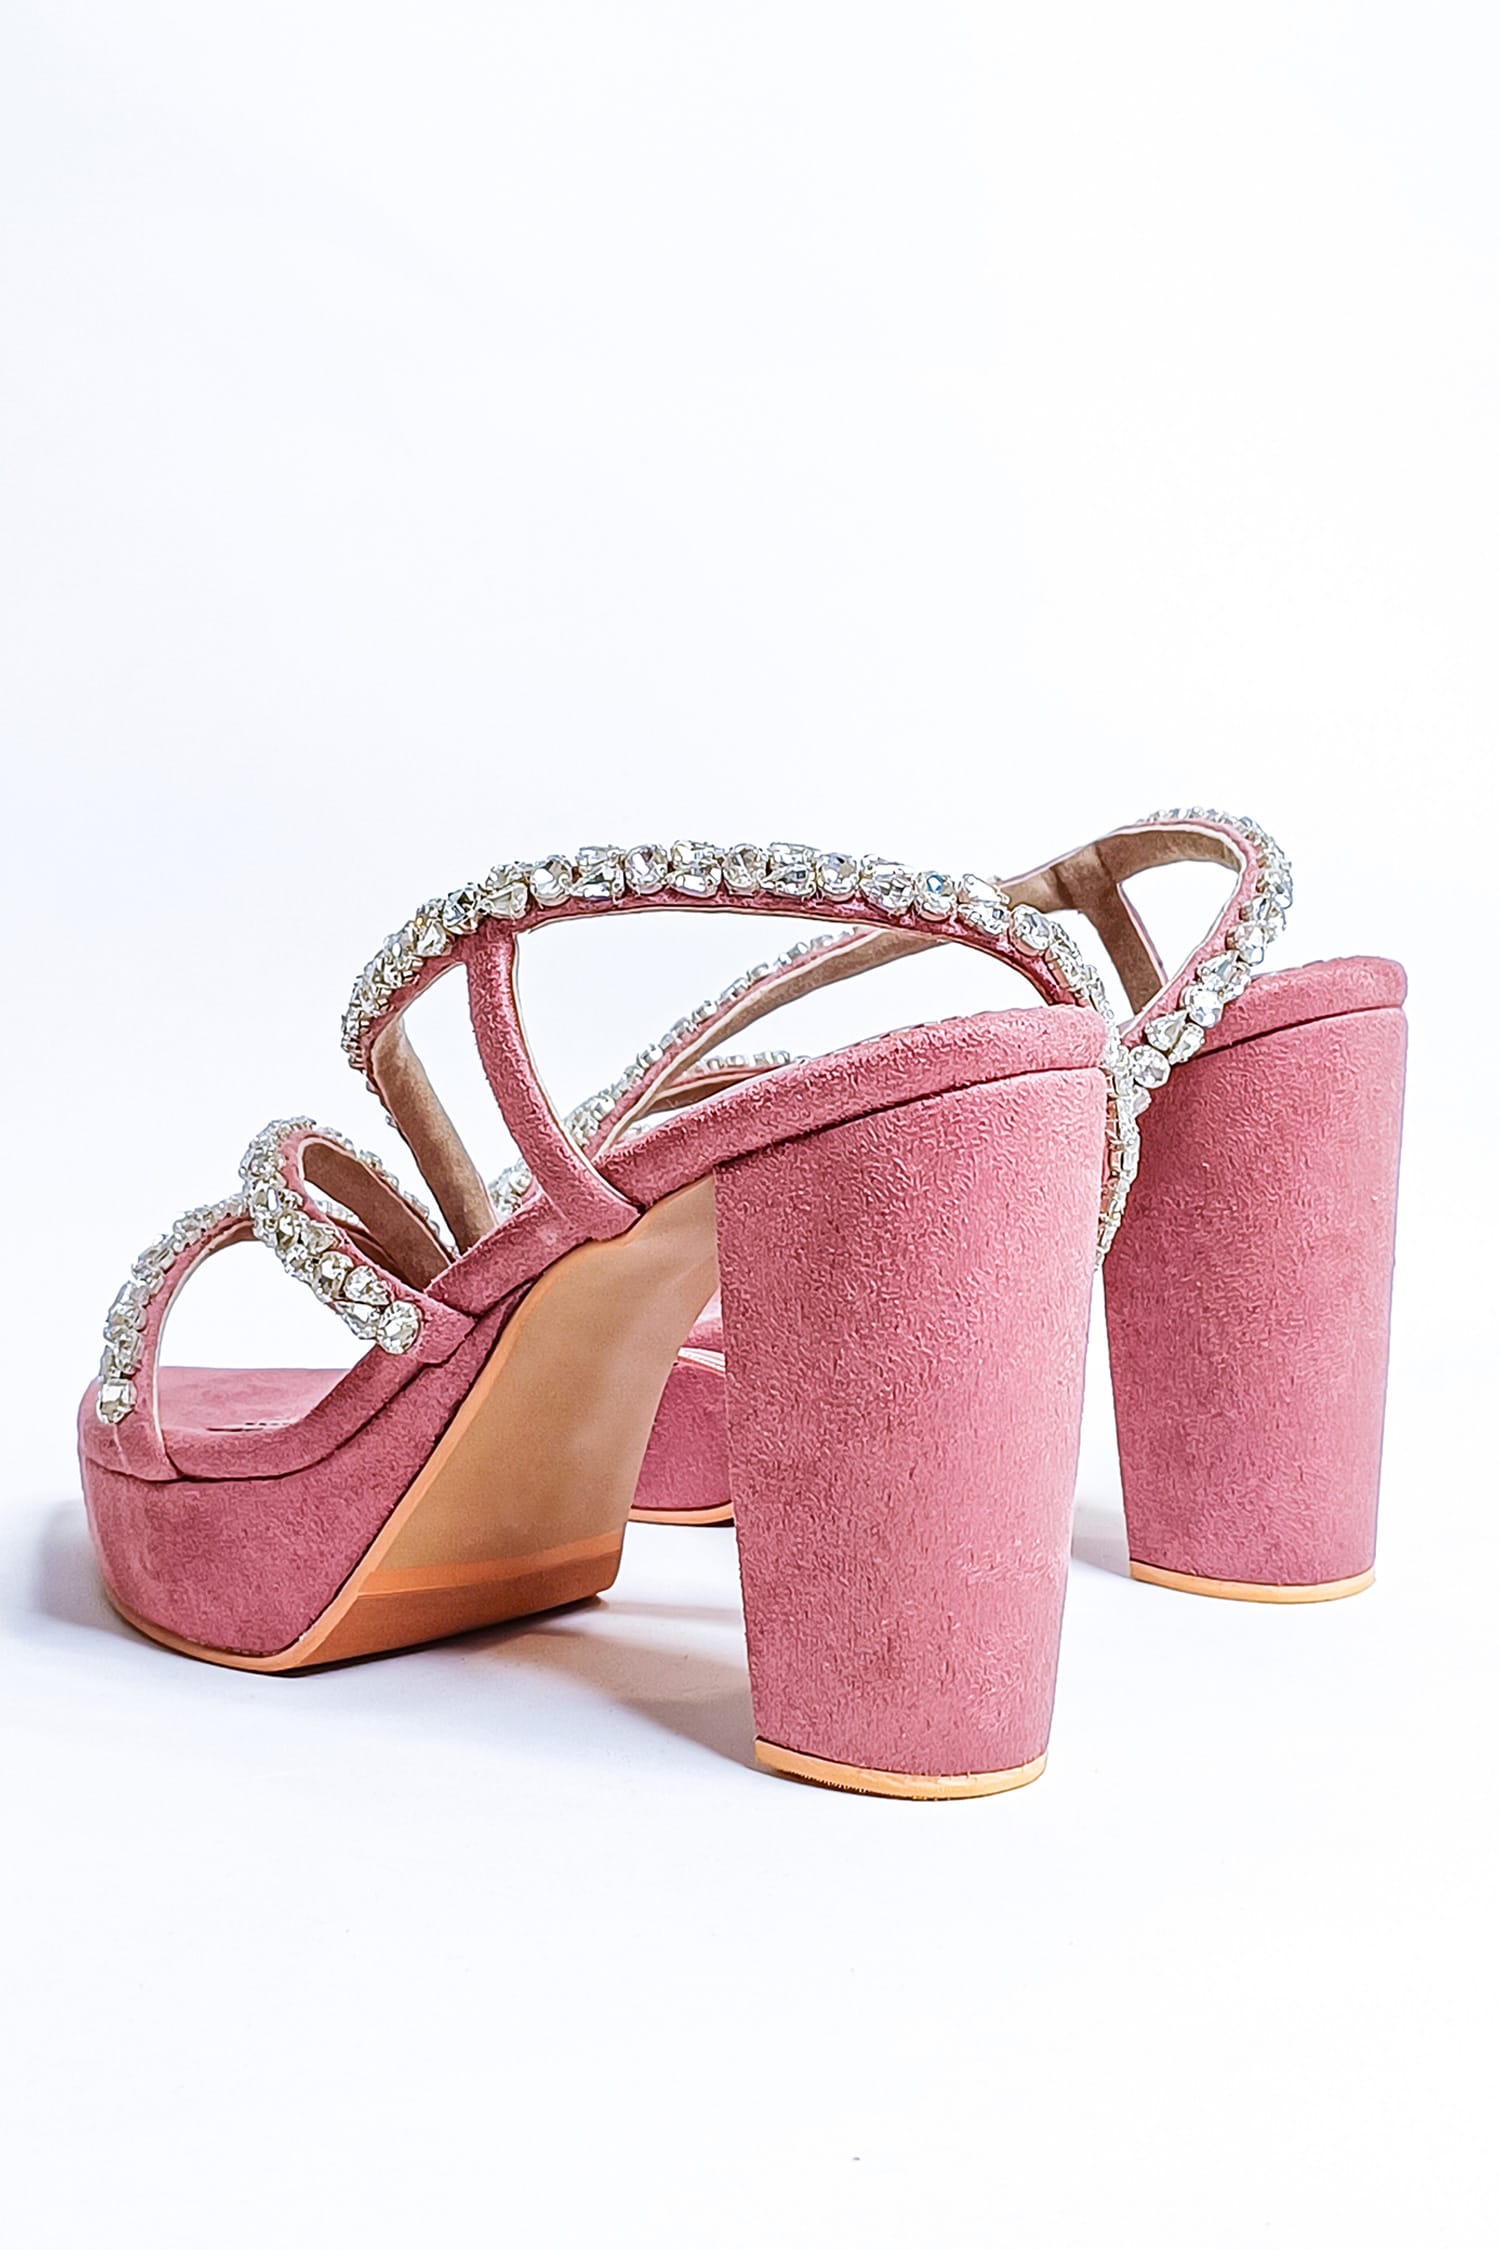 Steve Madden Pink Velvet Carrson Heel Size 8 - $50 (58% Off Retail) - From  Kendall